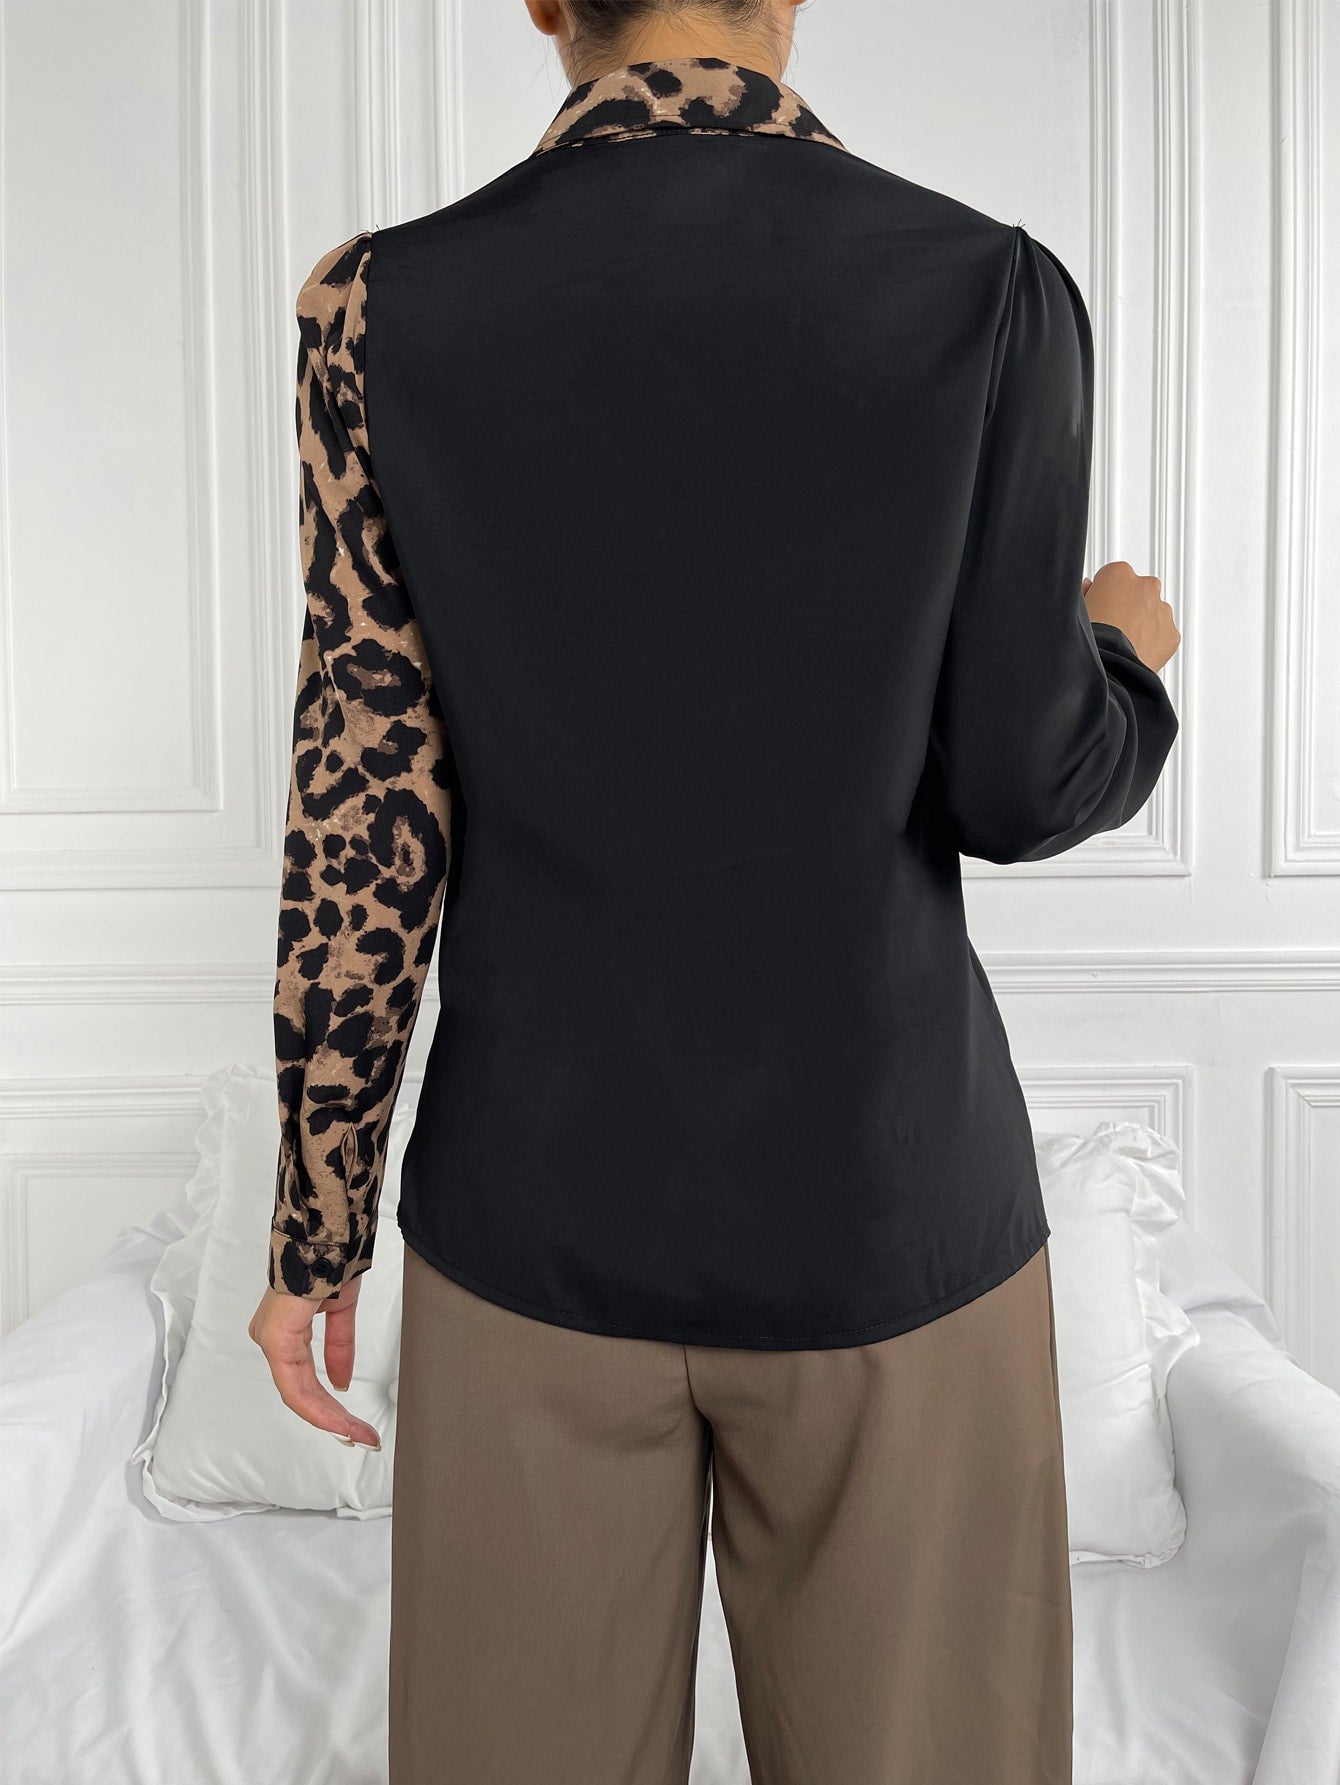 Leopard Print Spliced Button Up Blouse